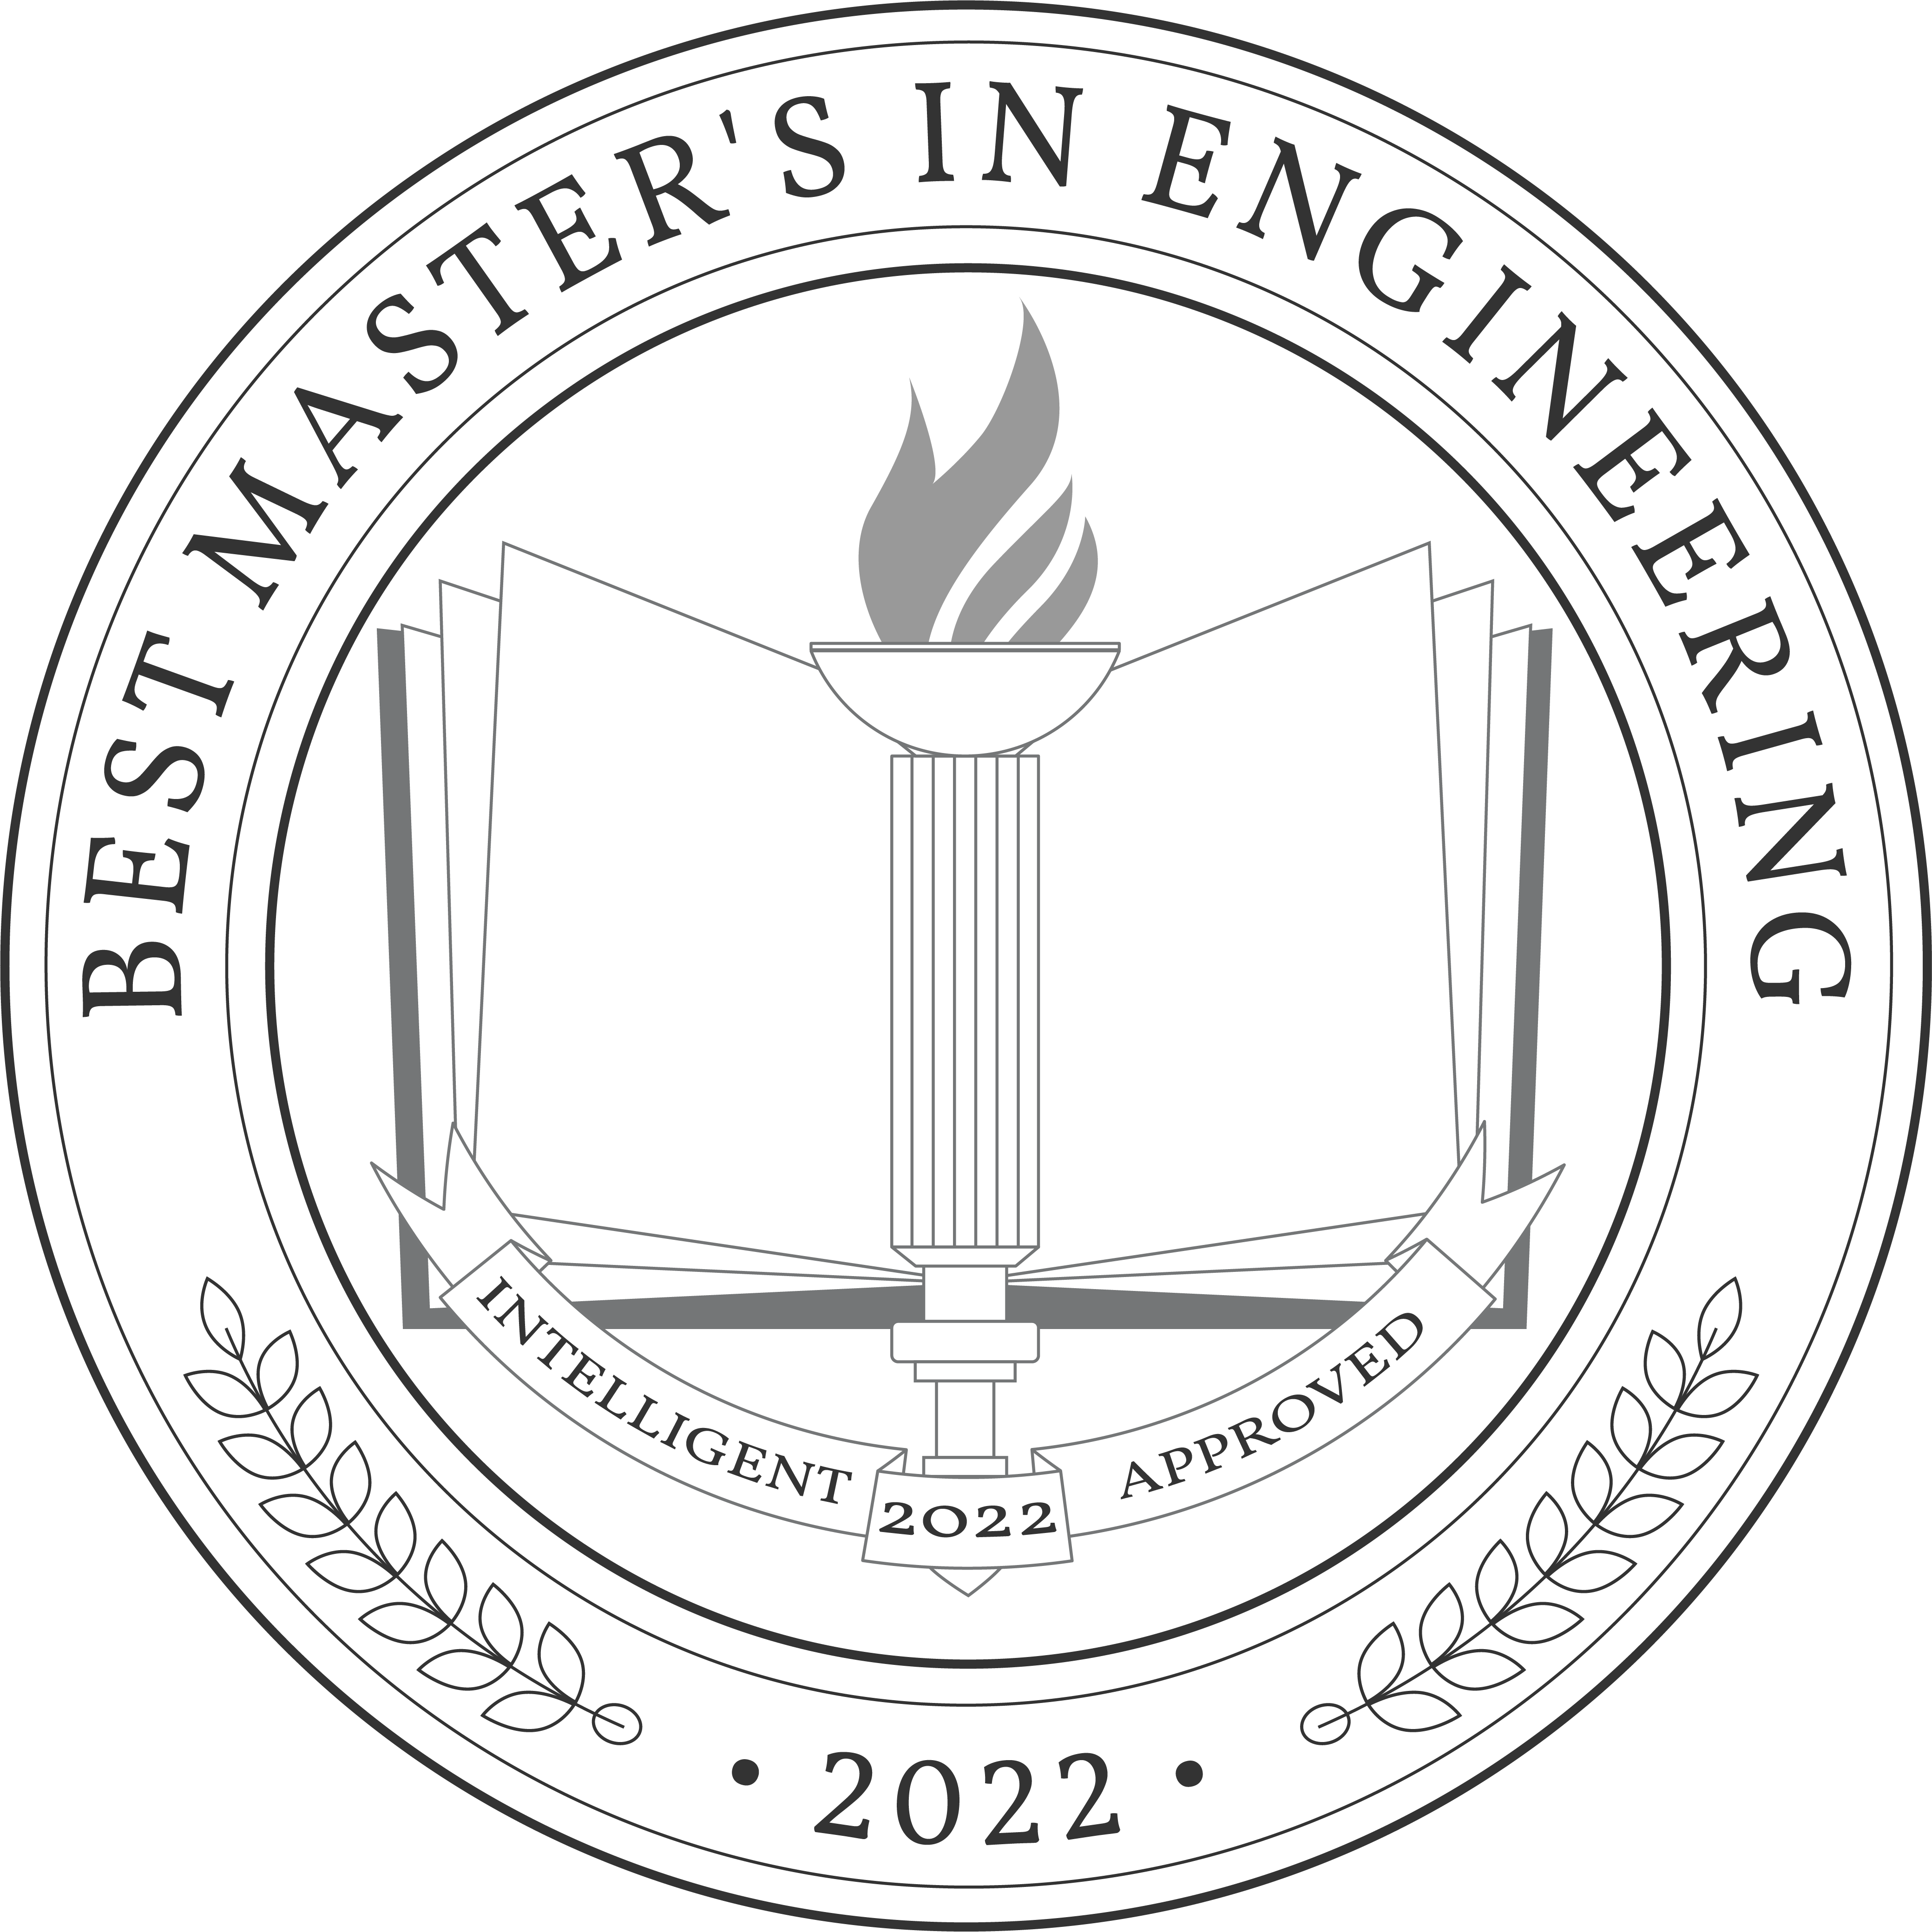 Best Master's in Engineering Badge